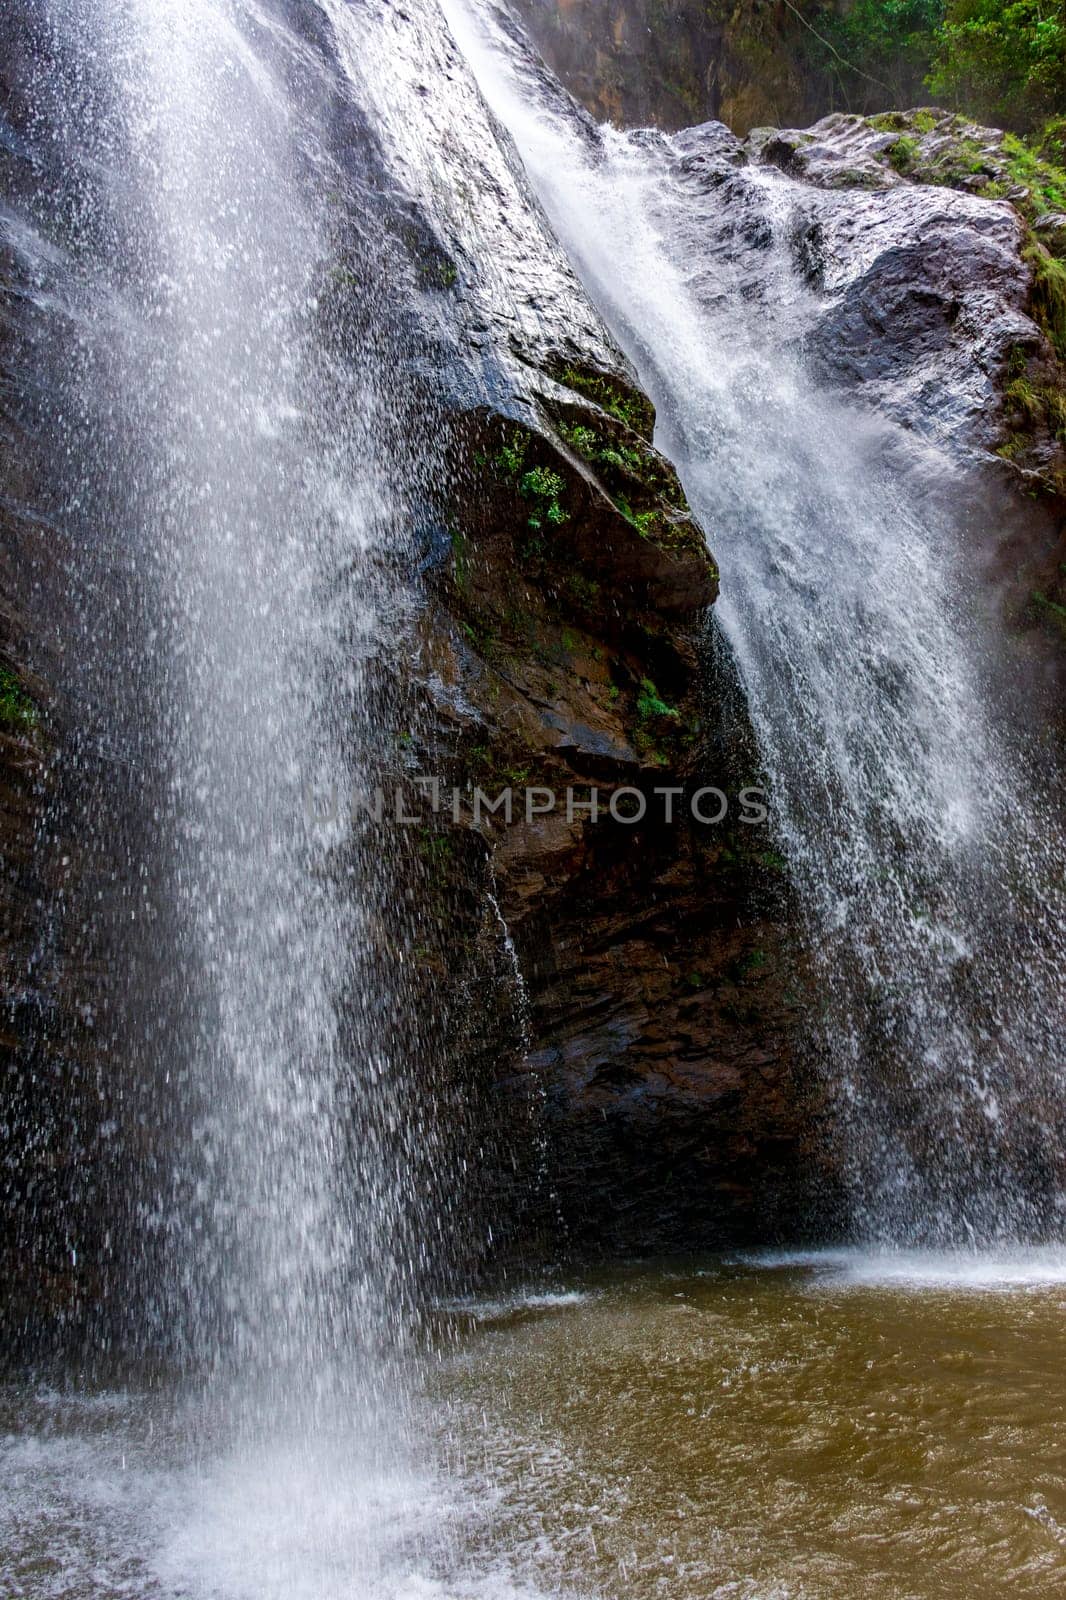 Waterfall splashing through the rocks by Fred_Pinheiro